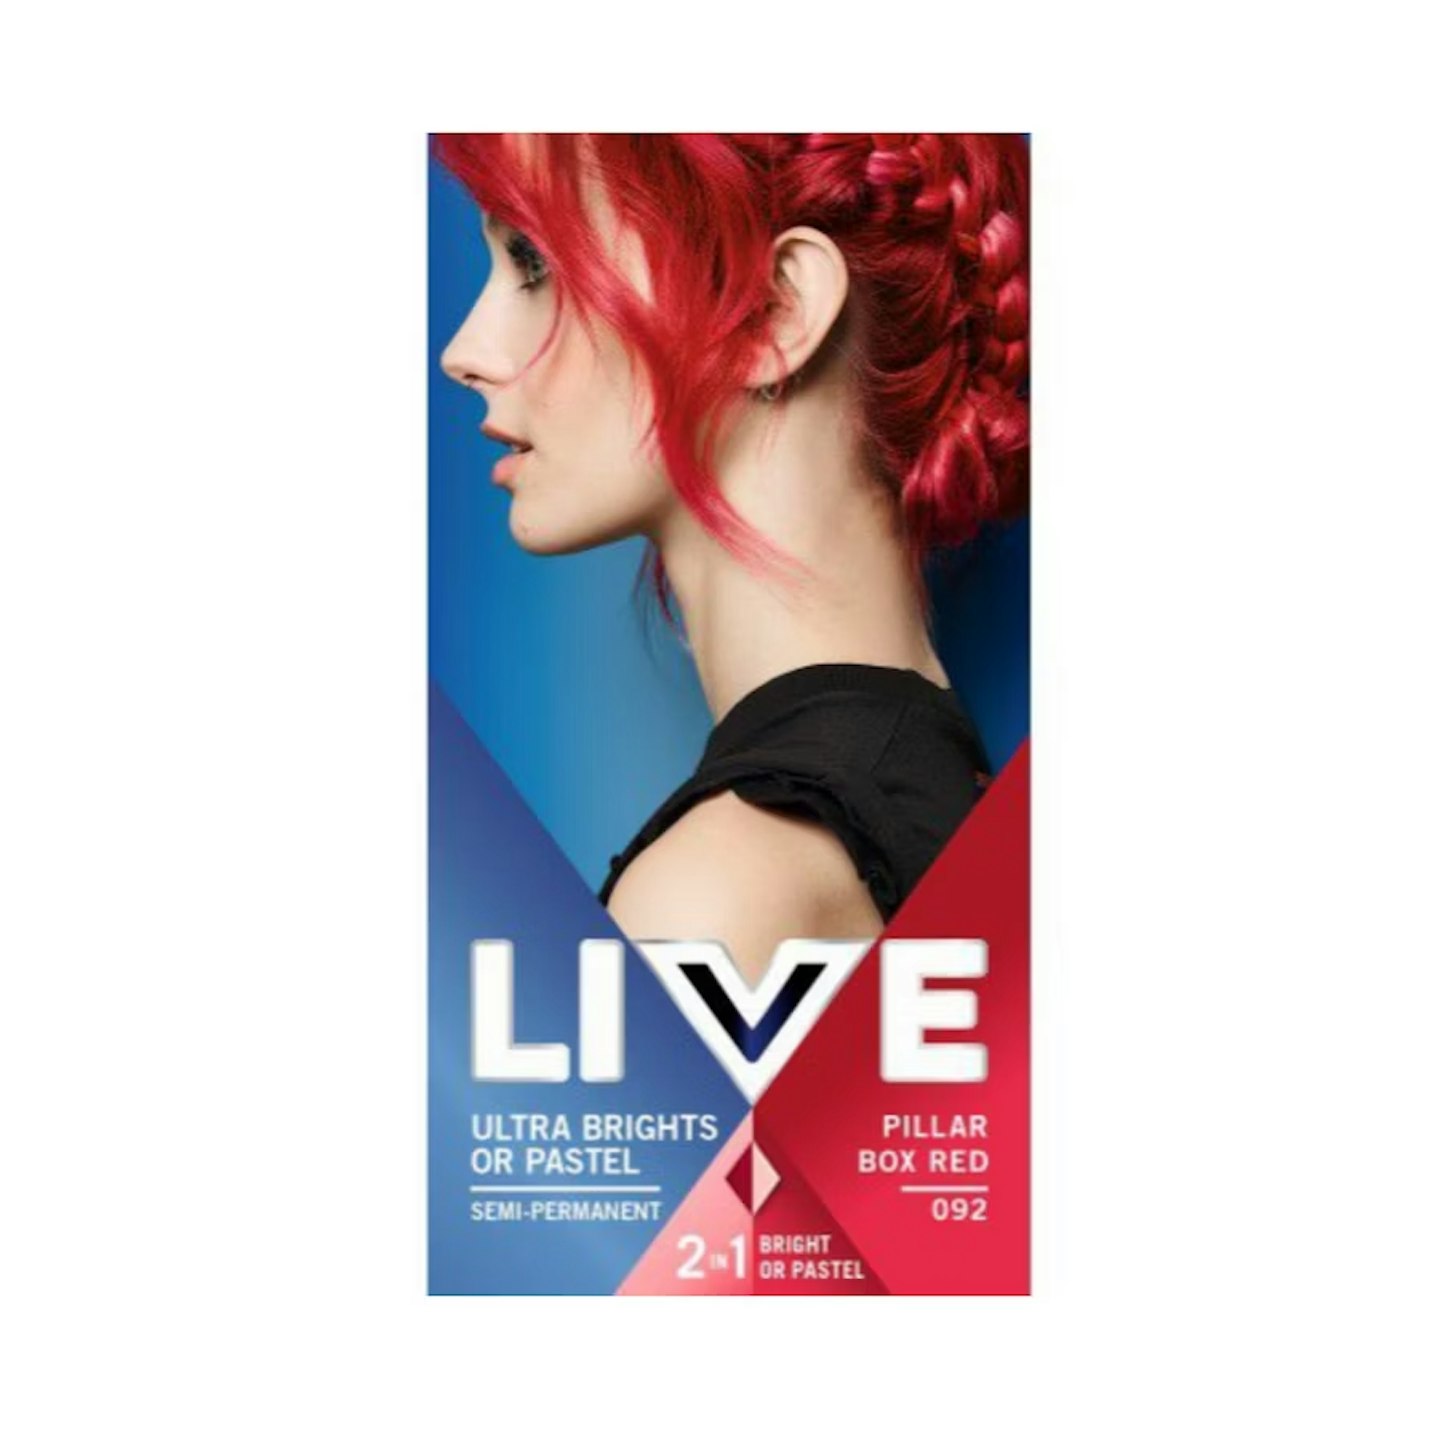 Schwarzkopf LIVE Semi-Permanent Hair Dye, Pillar Box Red